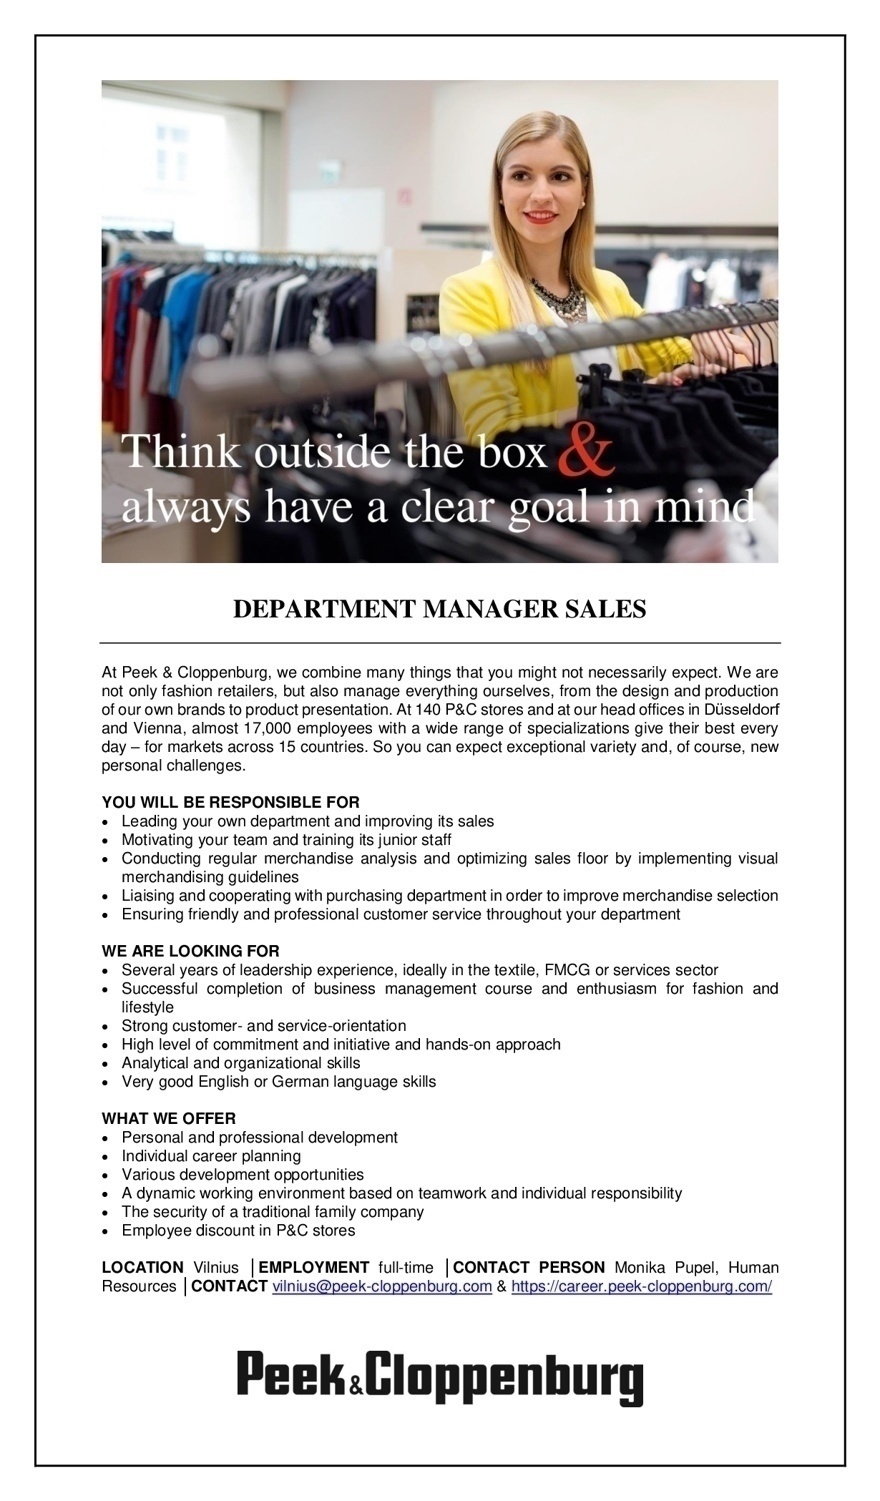 Peek & Cloppenburg Department manager sales 